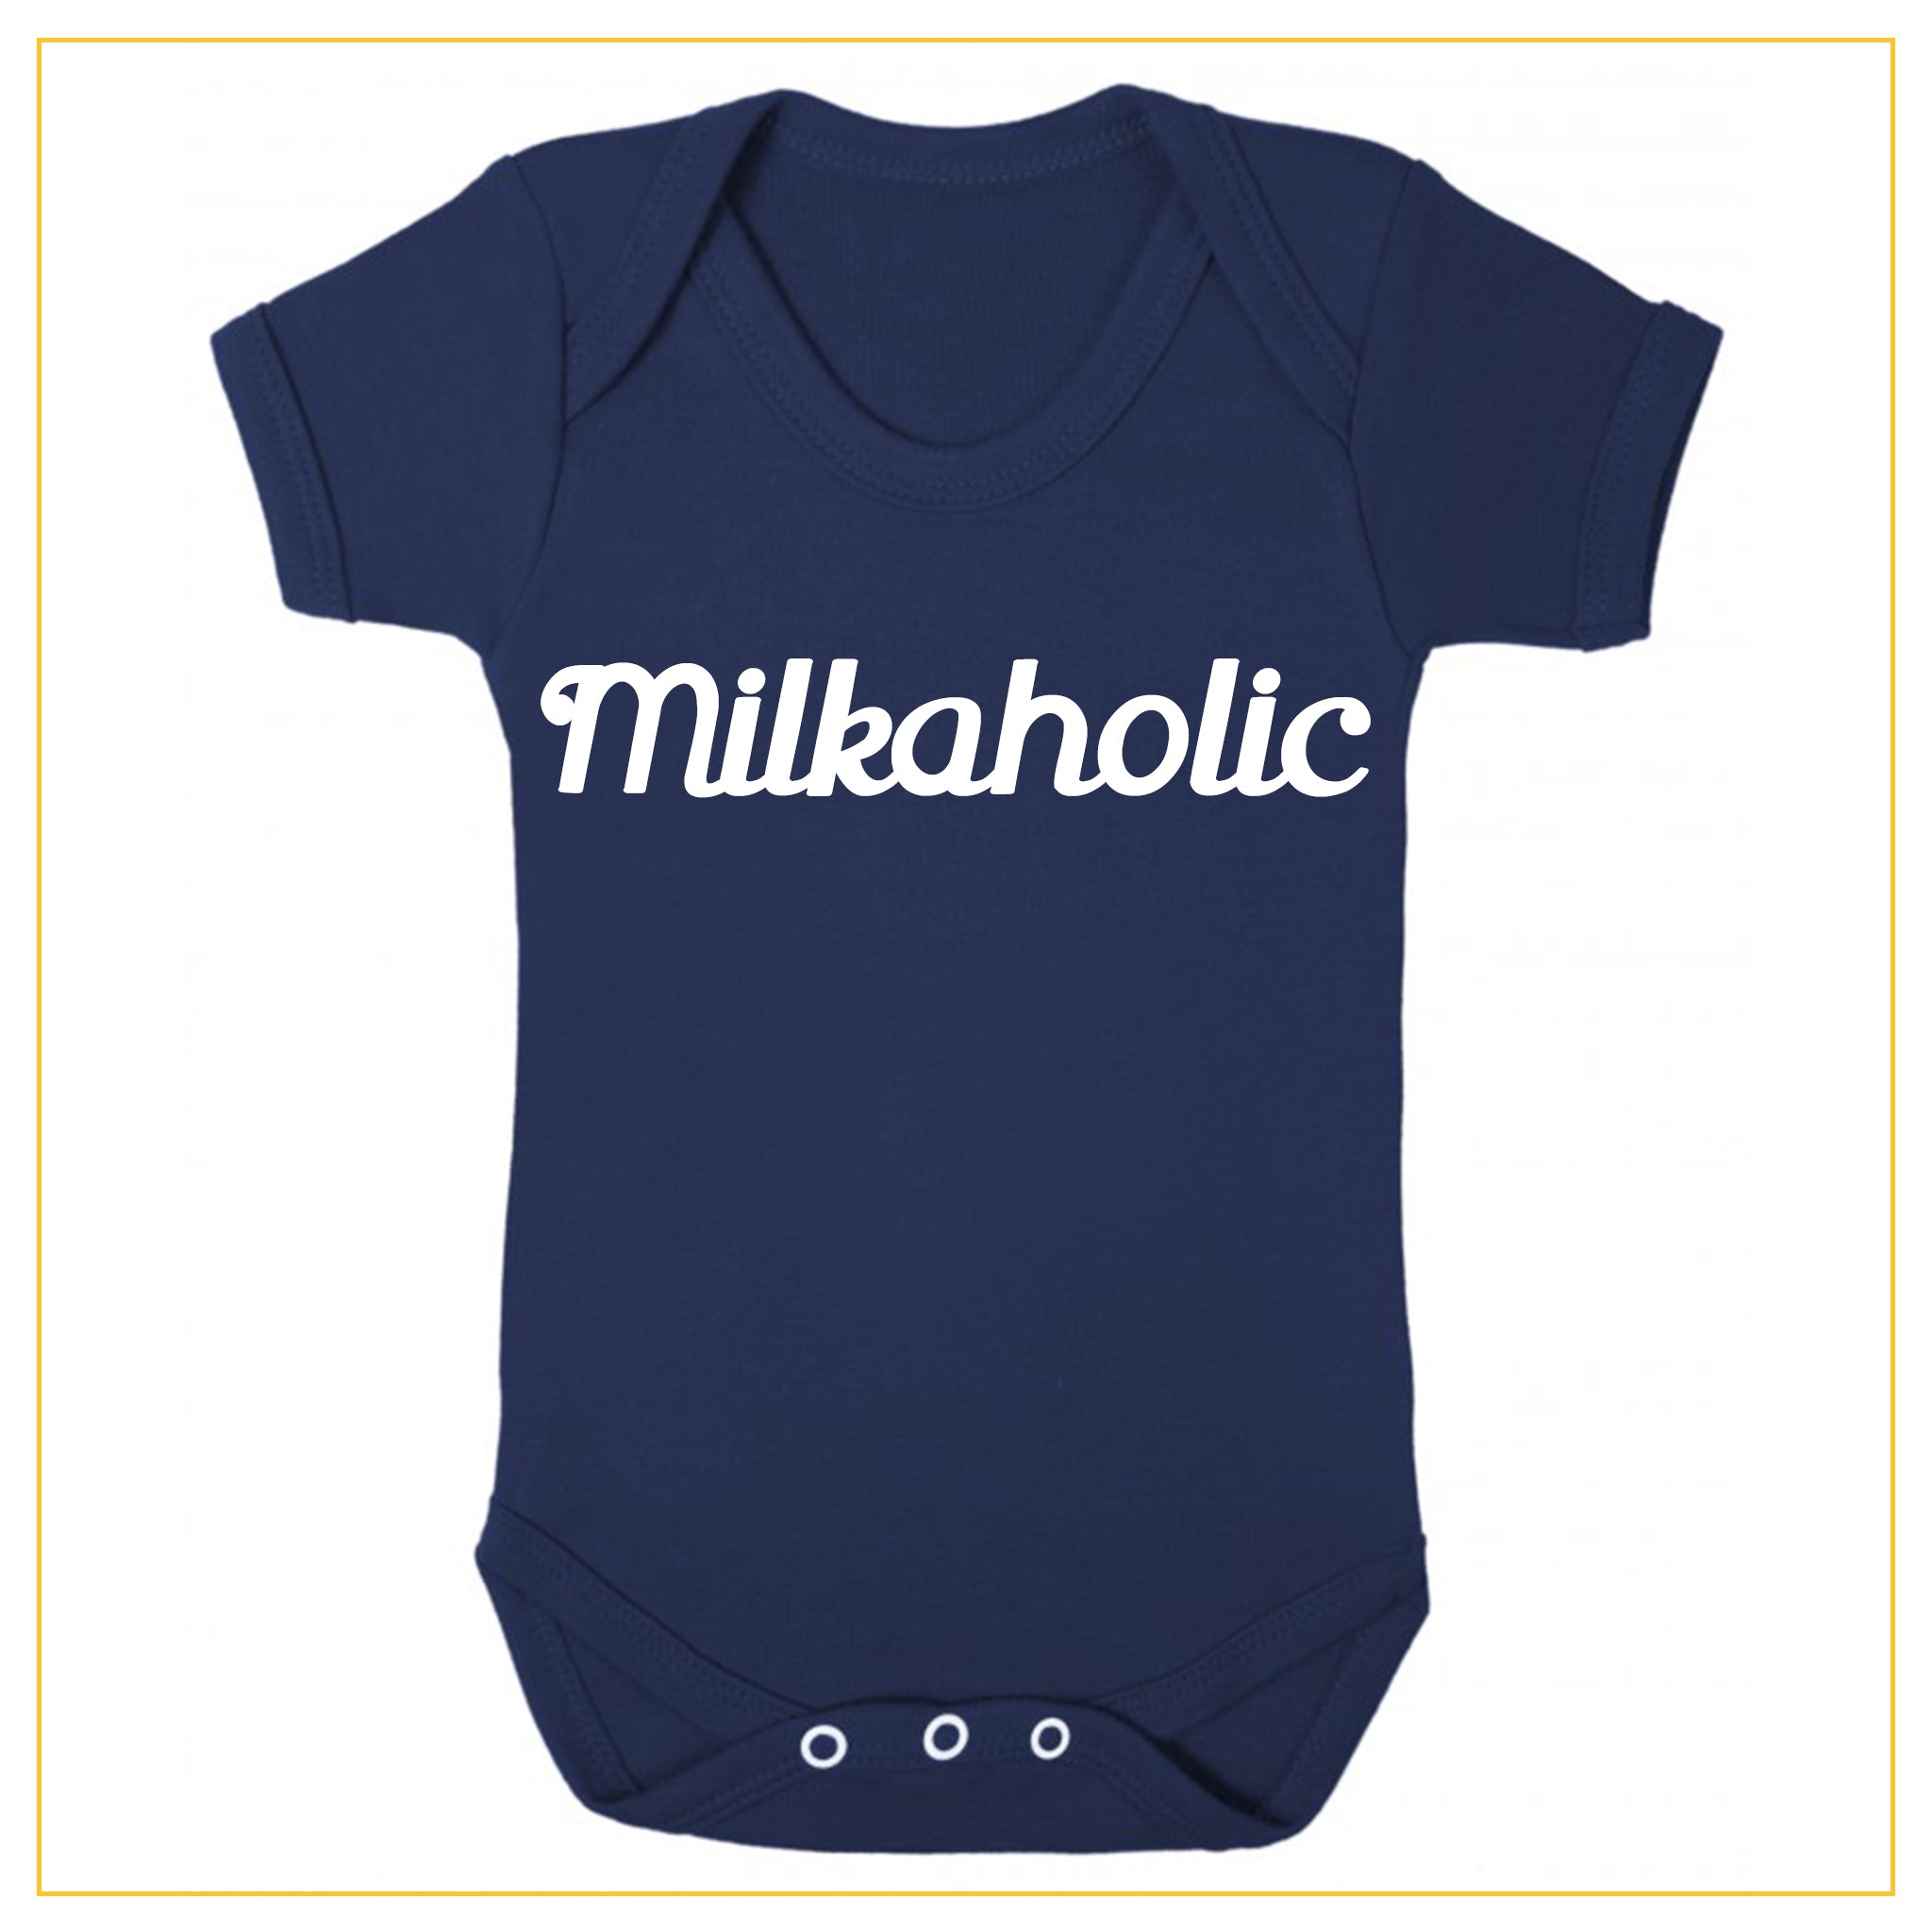 milkaholic novelty baby onesie in navy blue